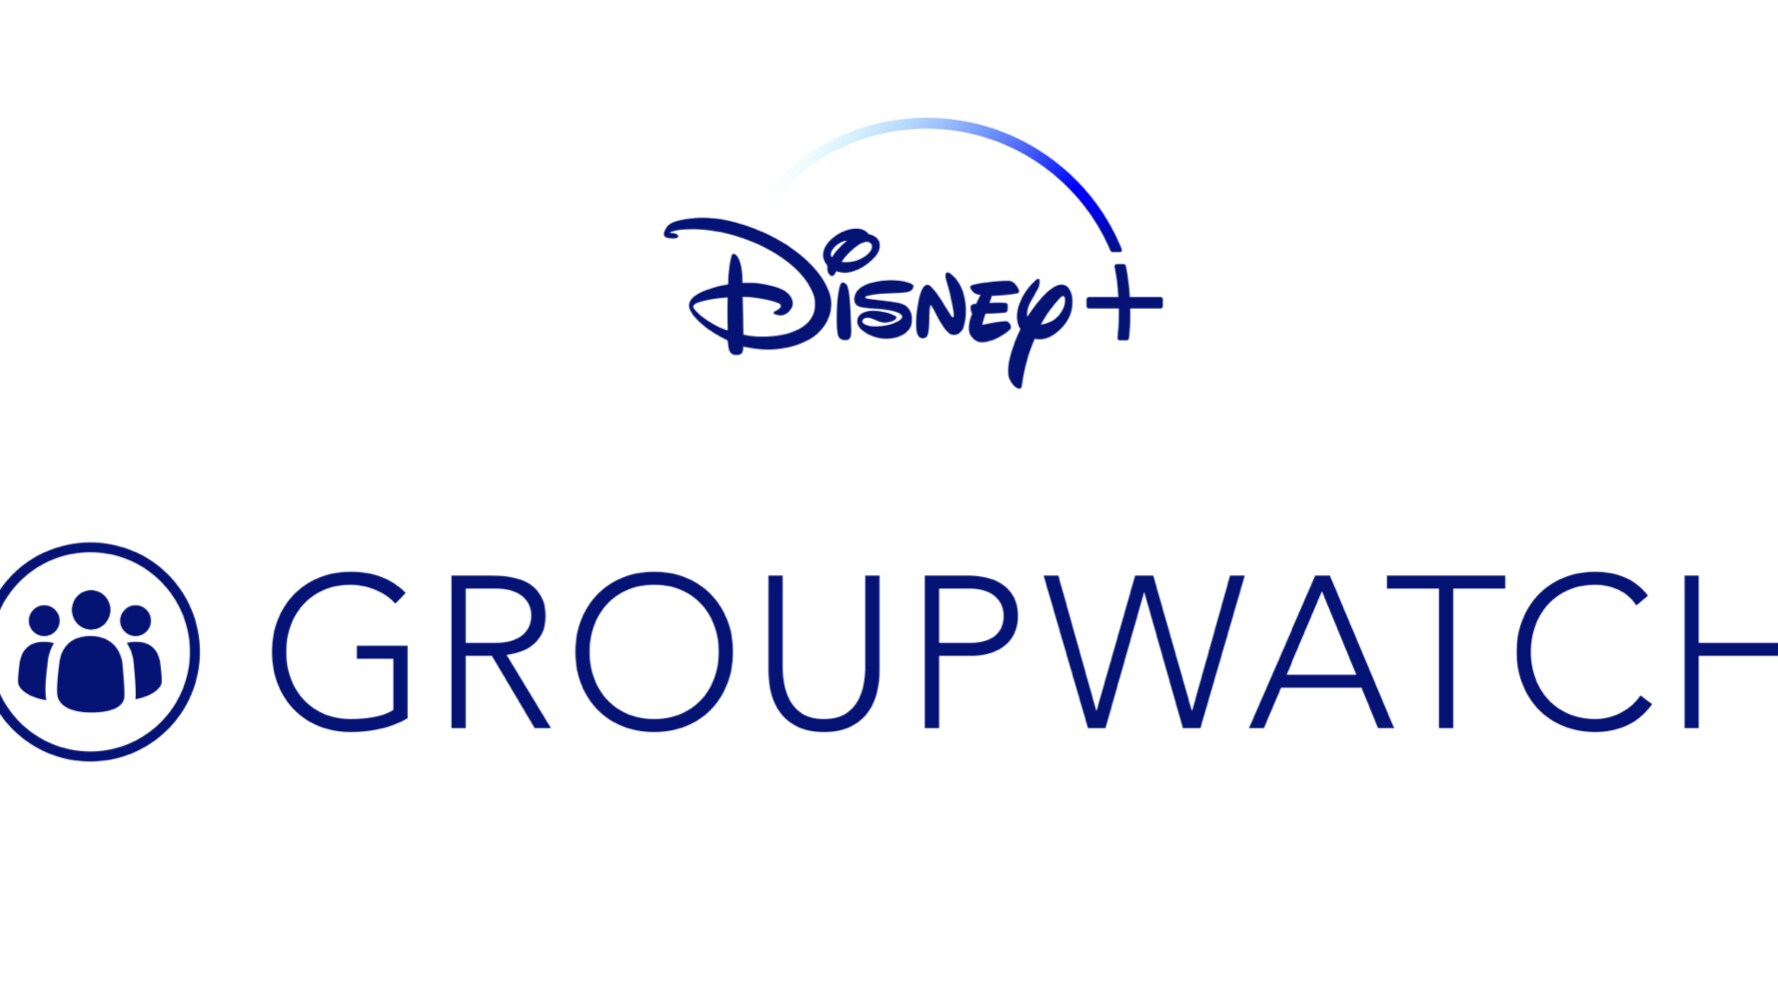 Disney+ Introduces GroupWatch